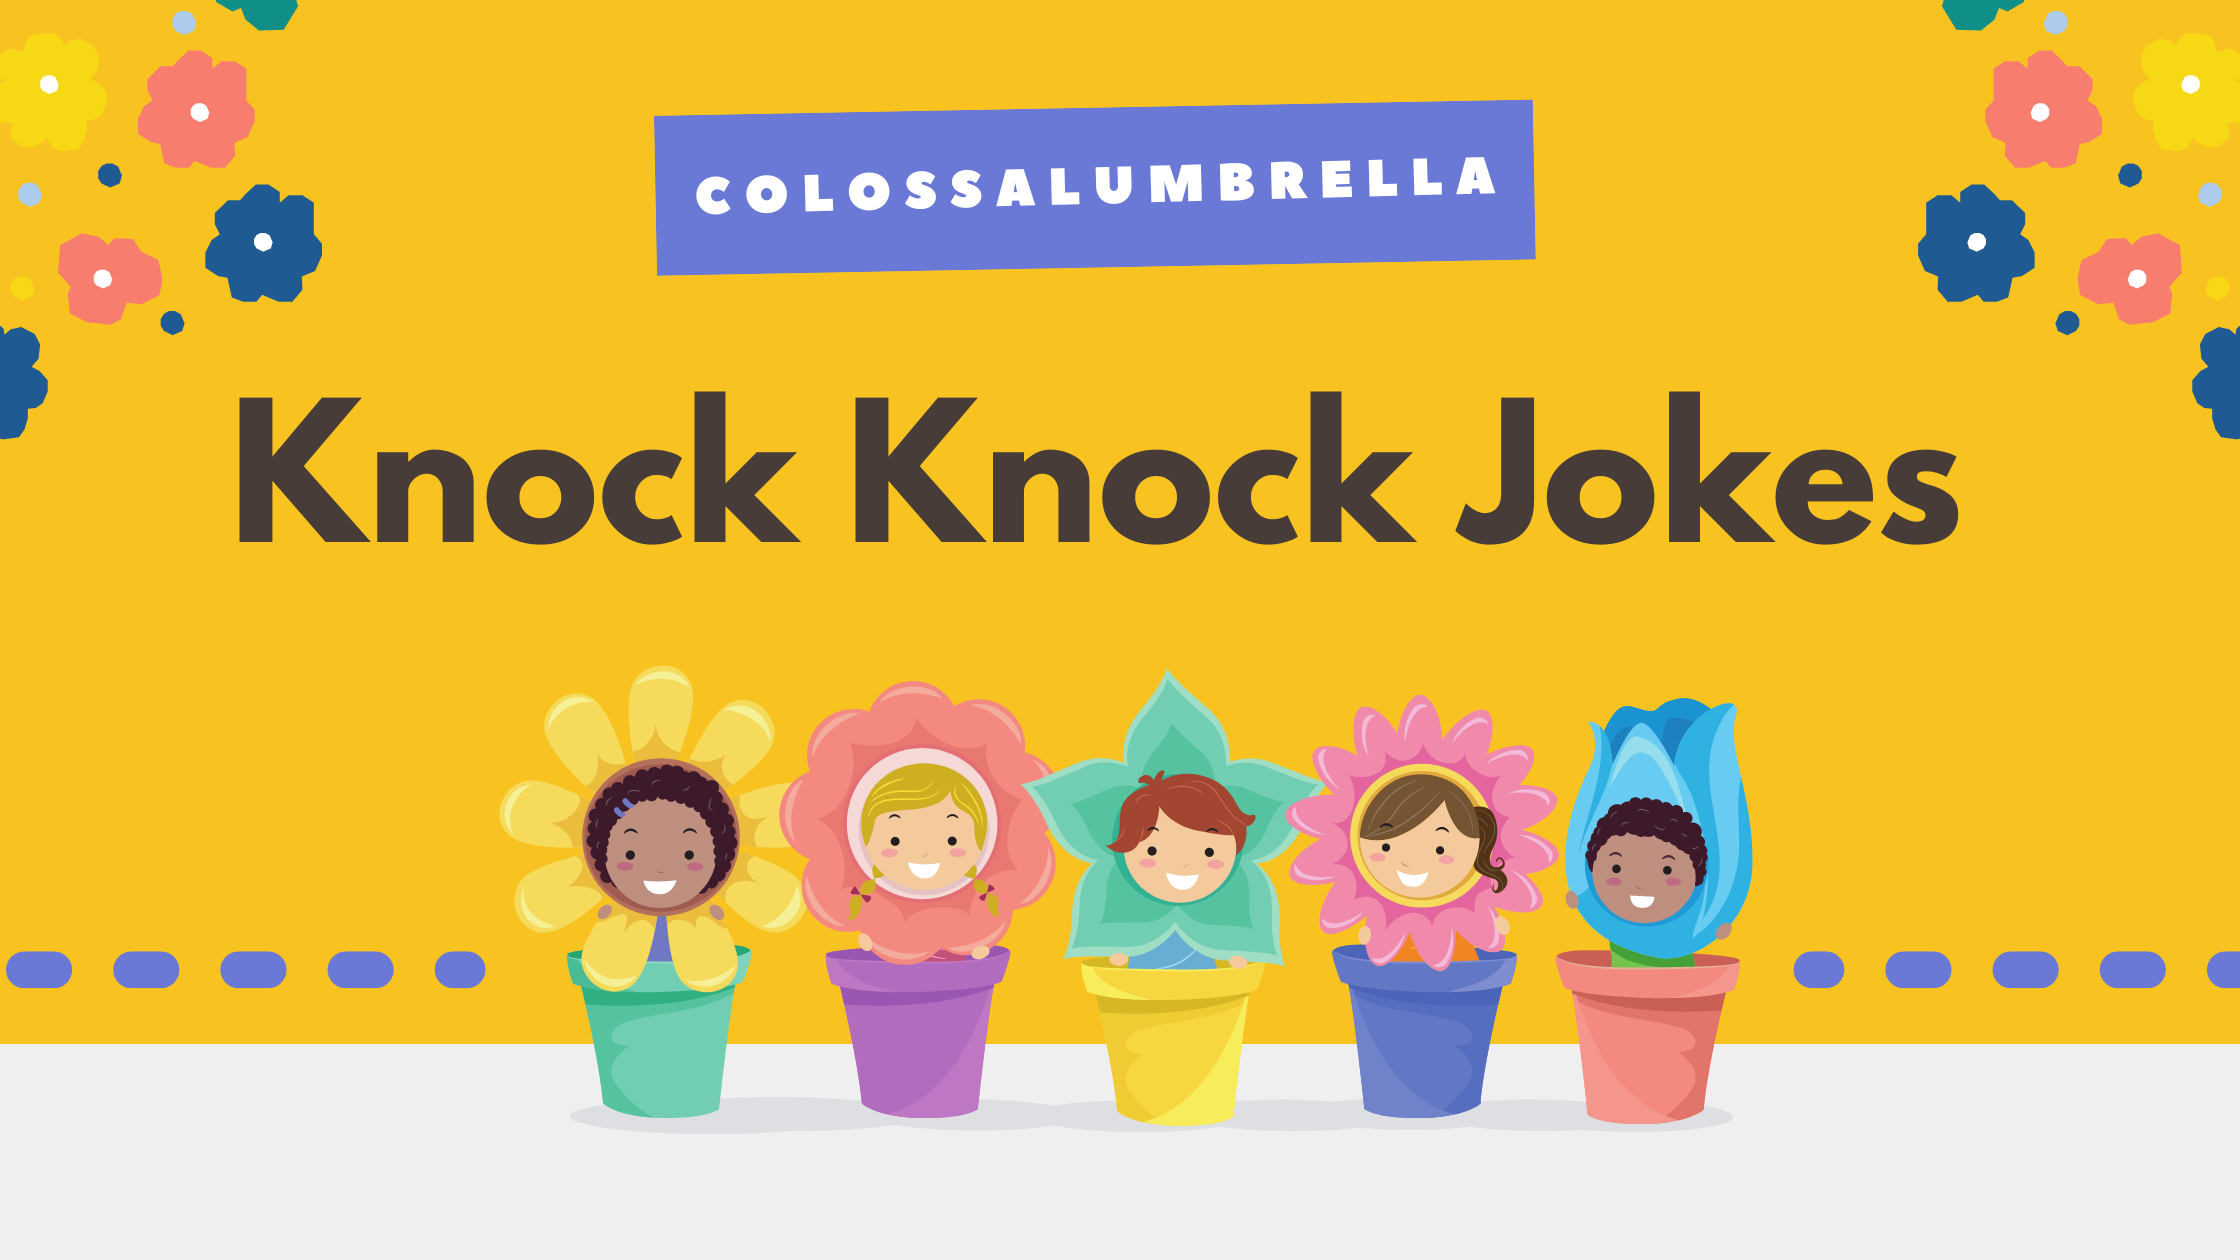 Hilarious 50+ knock knock jokes for toddlers